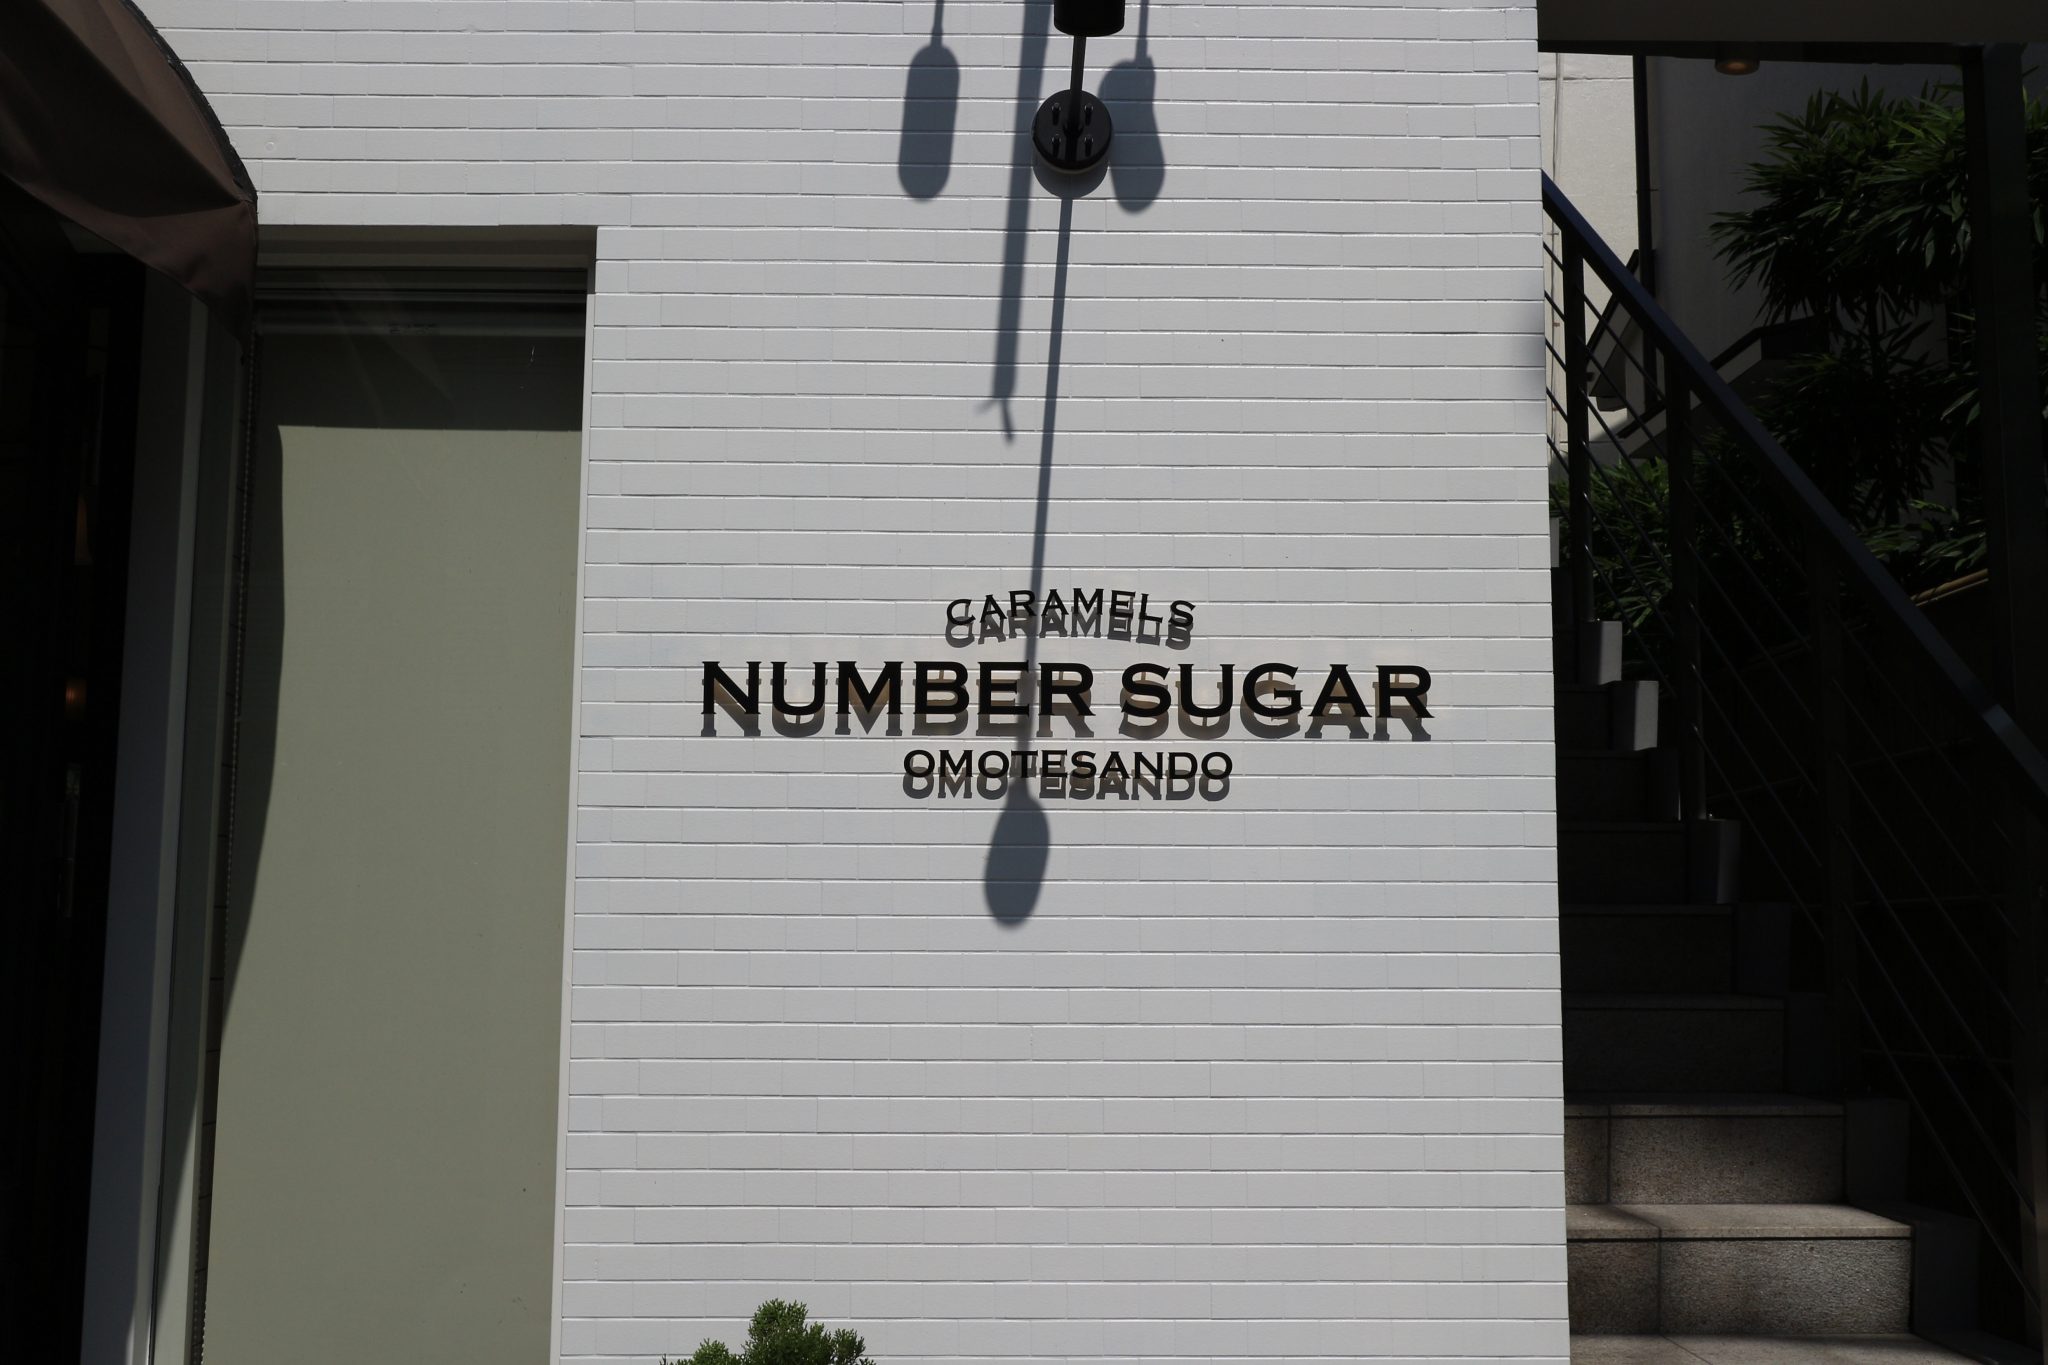 NUMBER-SUGAR omotesando caramel shop logo